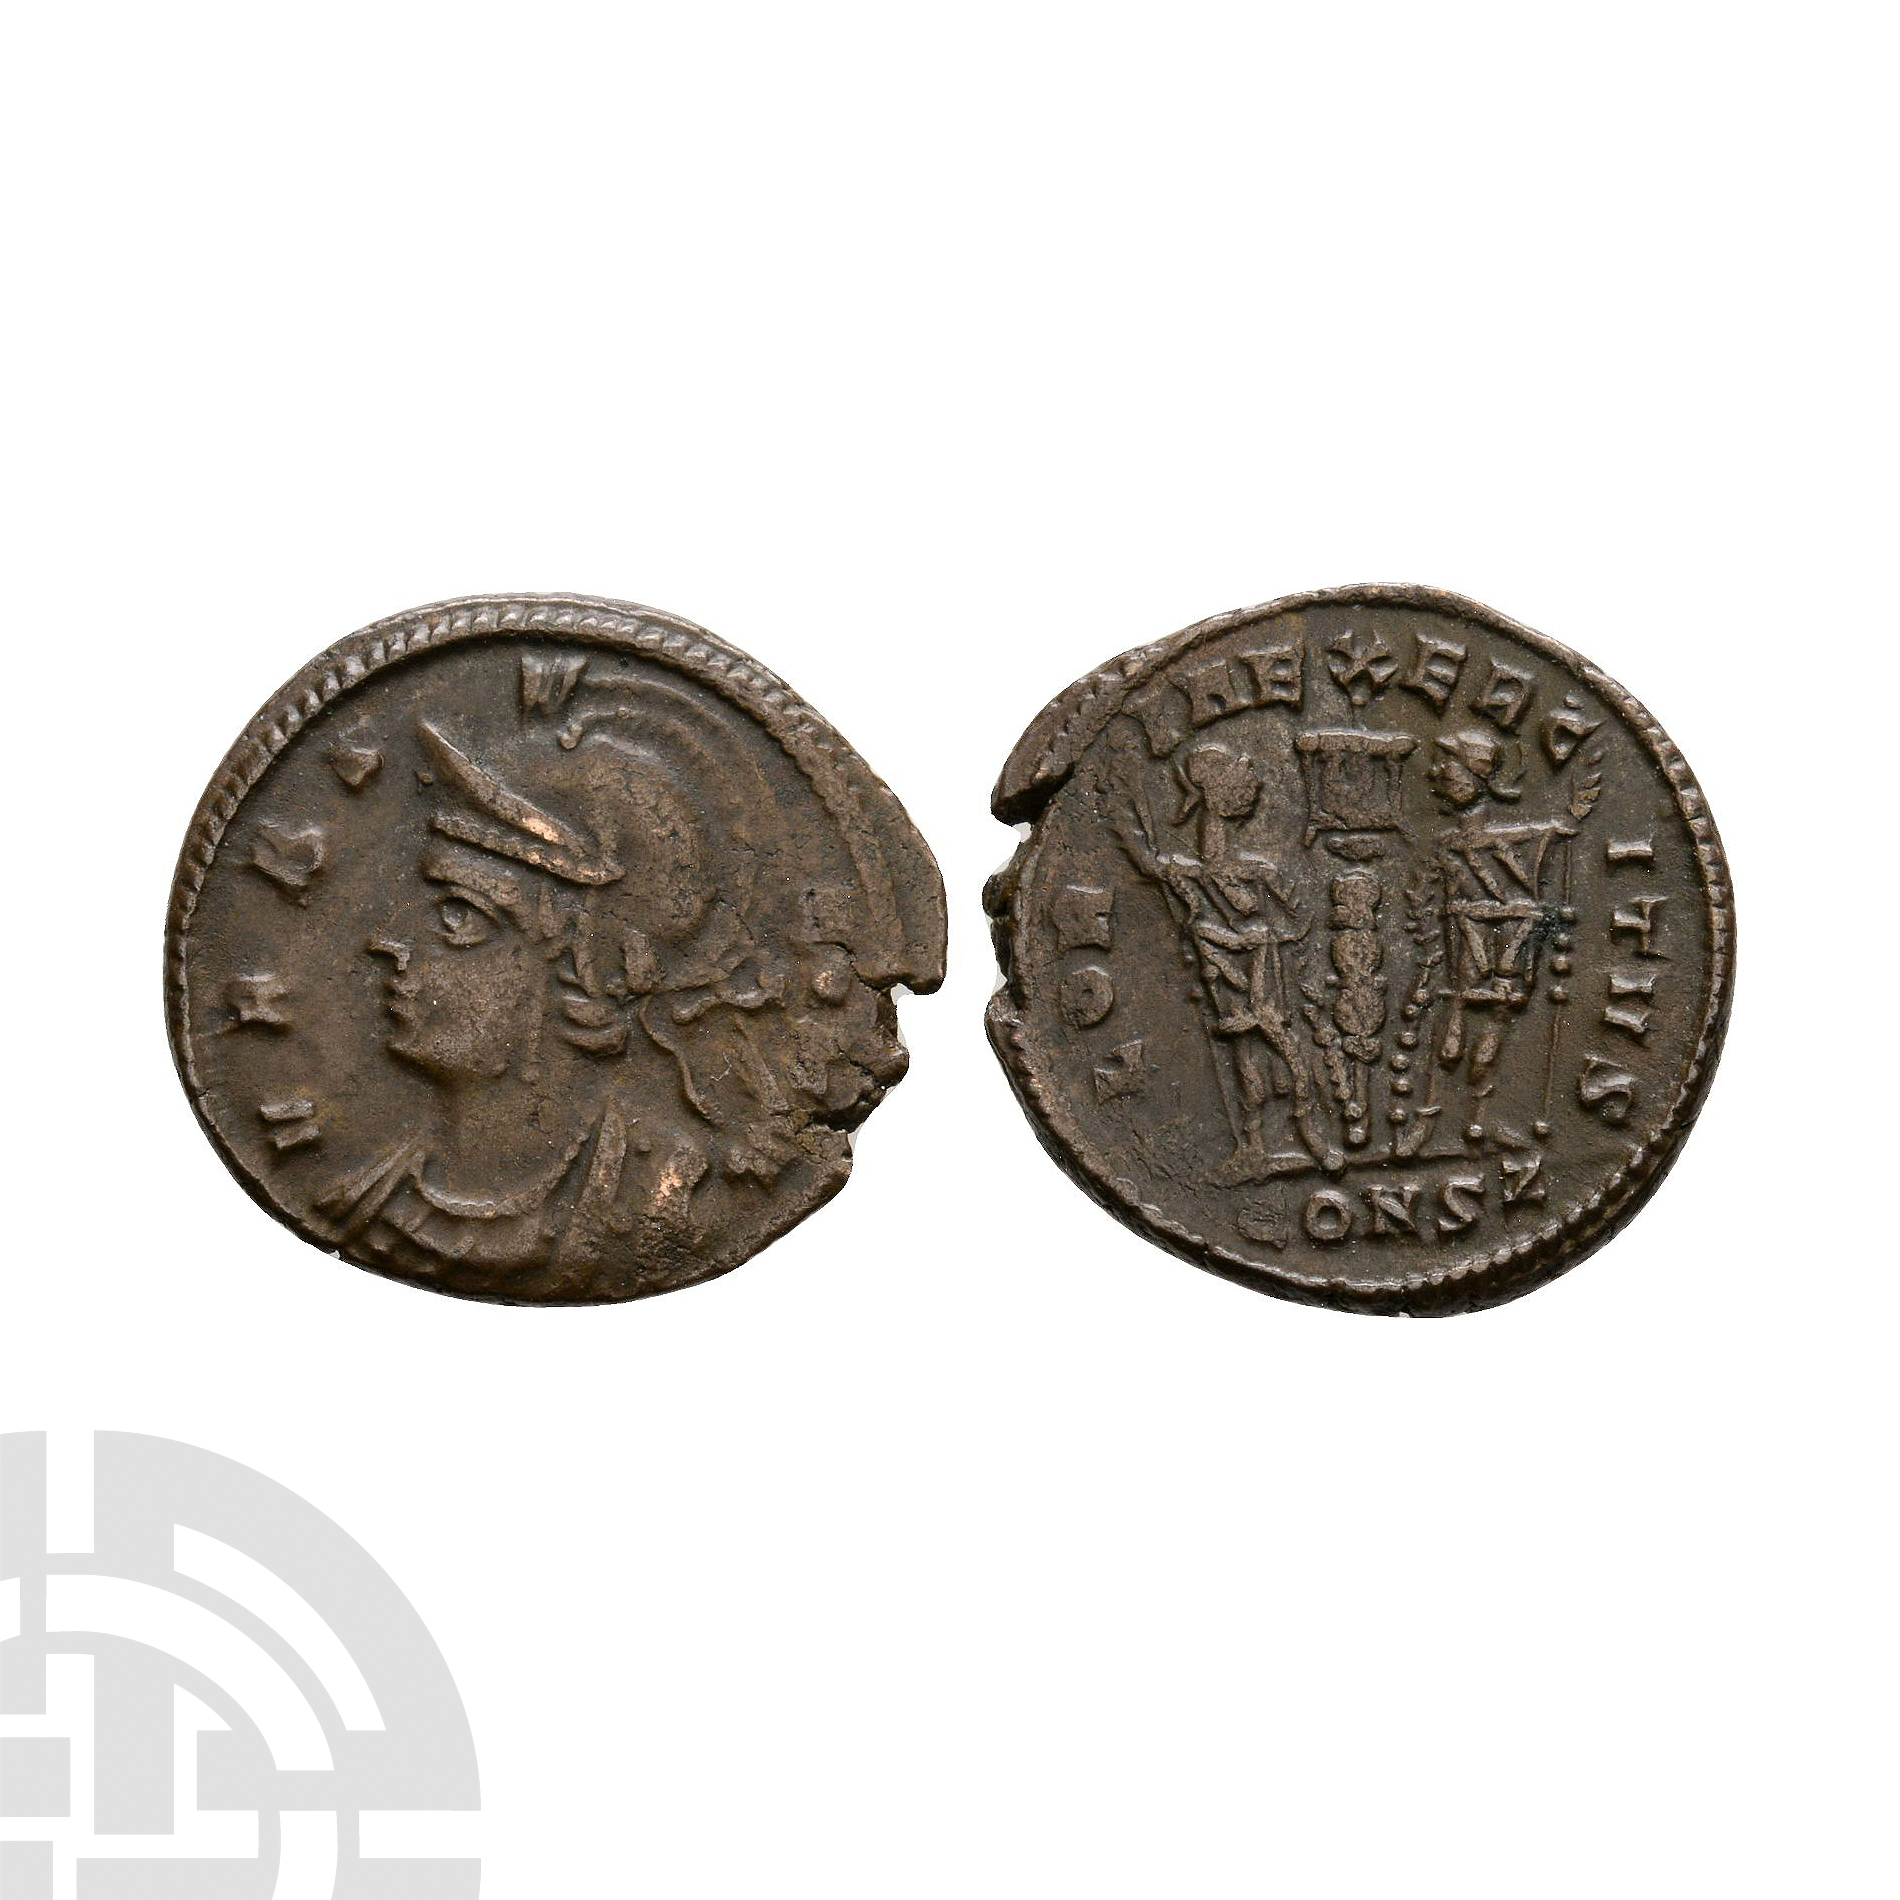 Ancient Roman Imperial Coins - Constantine I Period - Urbs Roma Commemorative Bronze